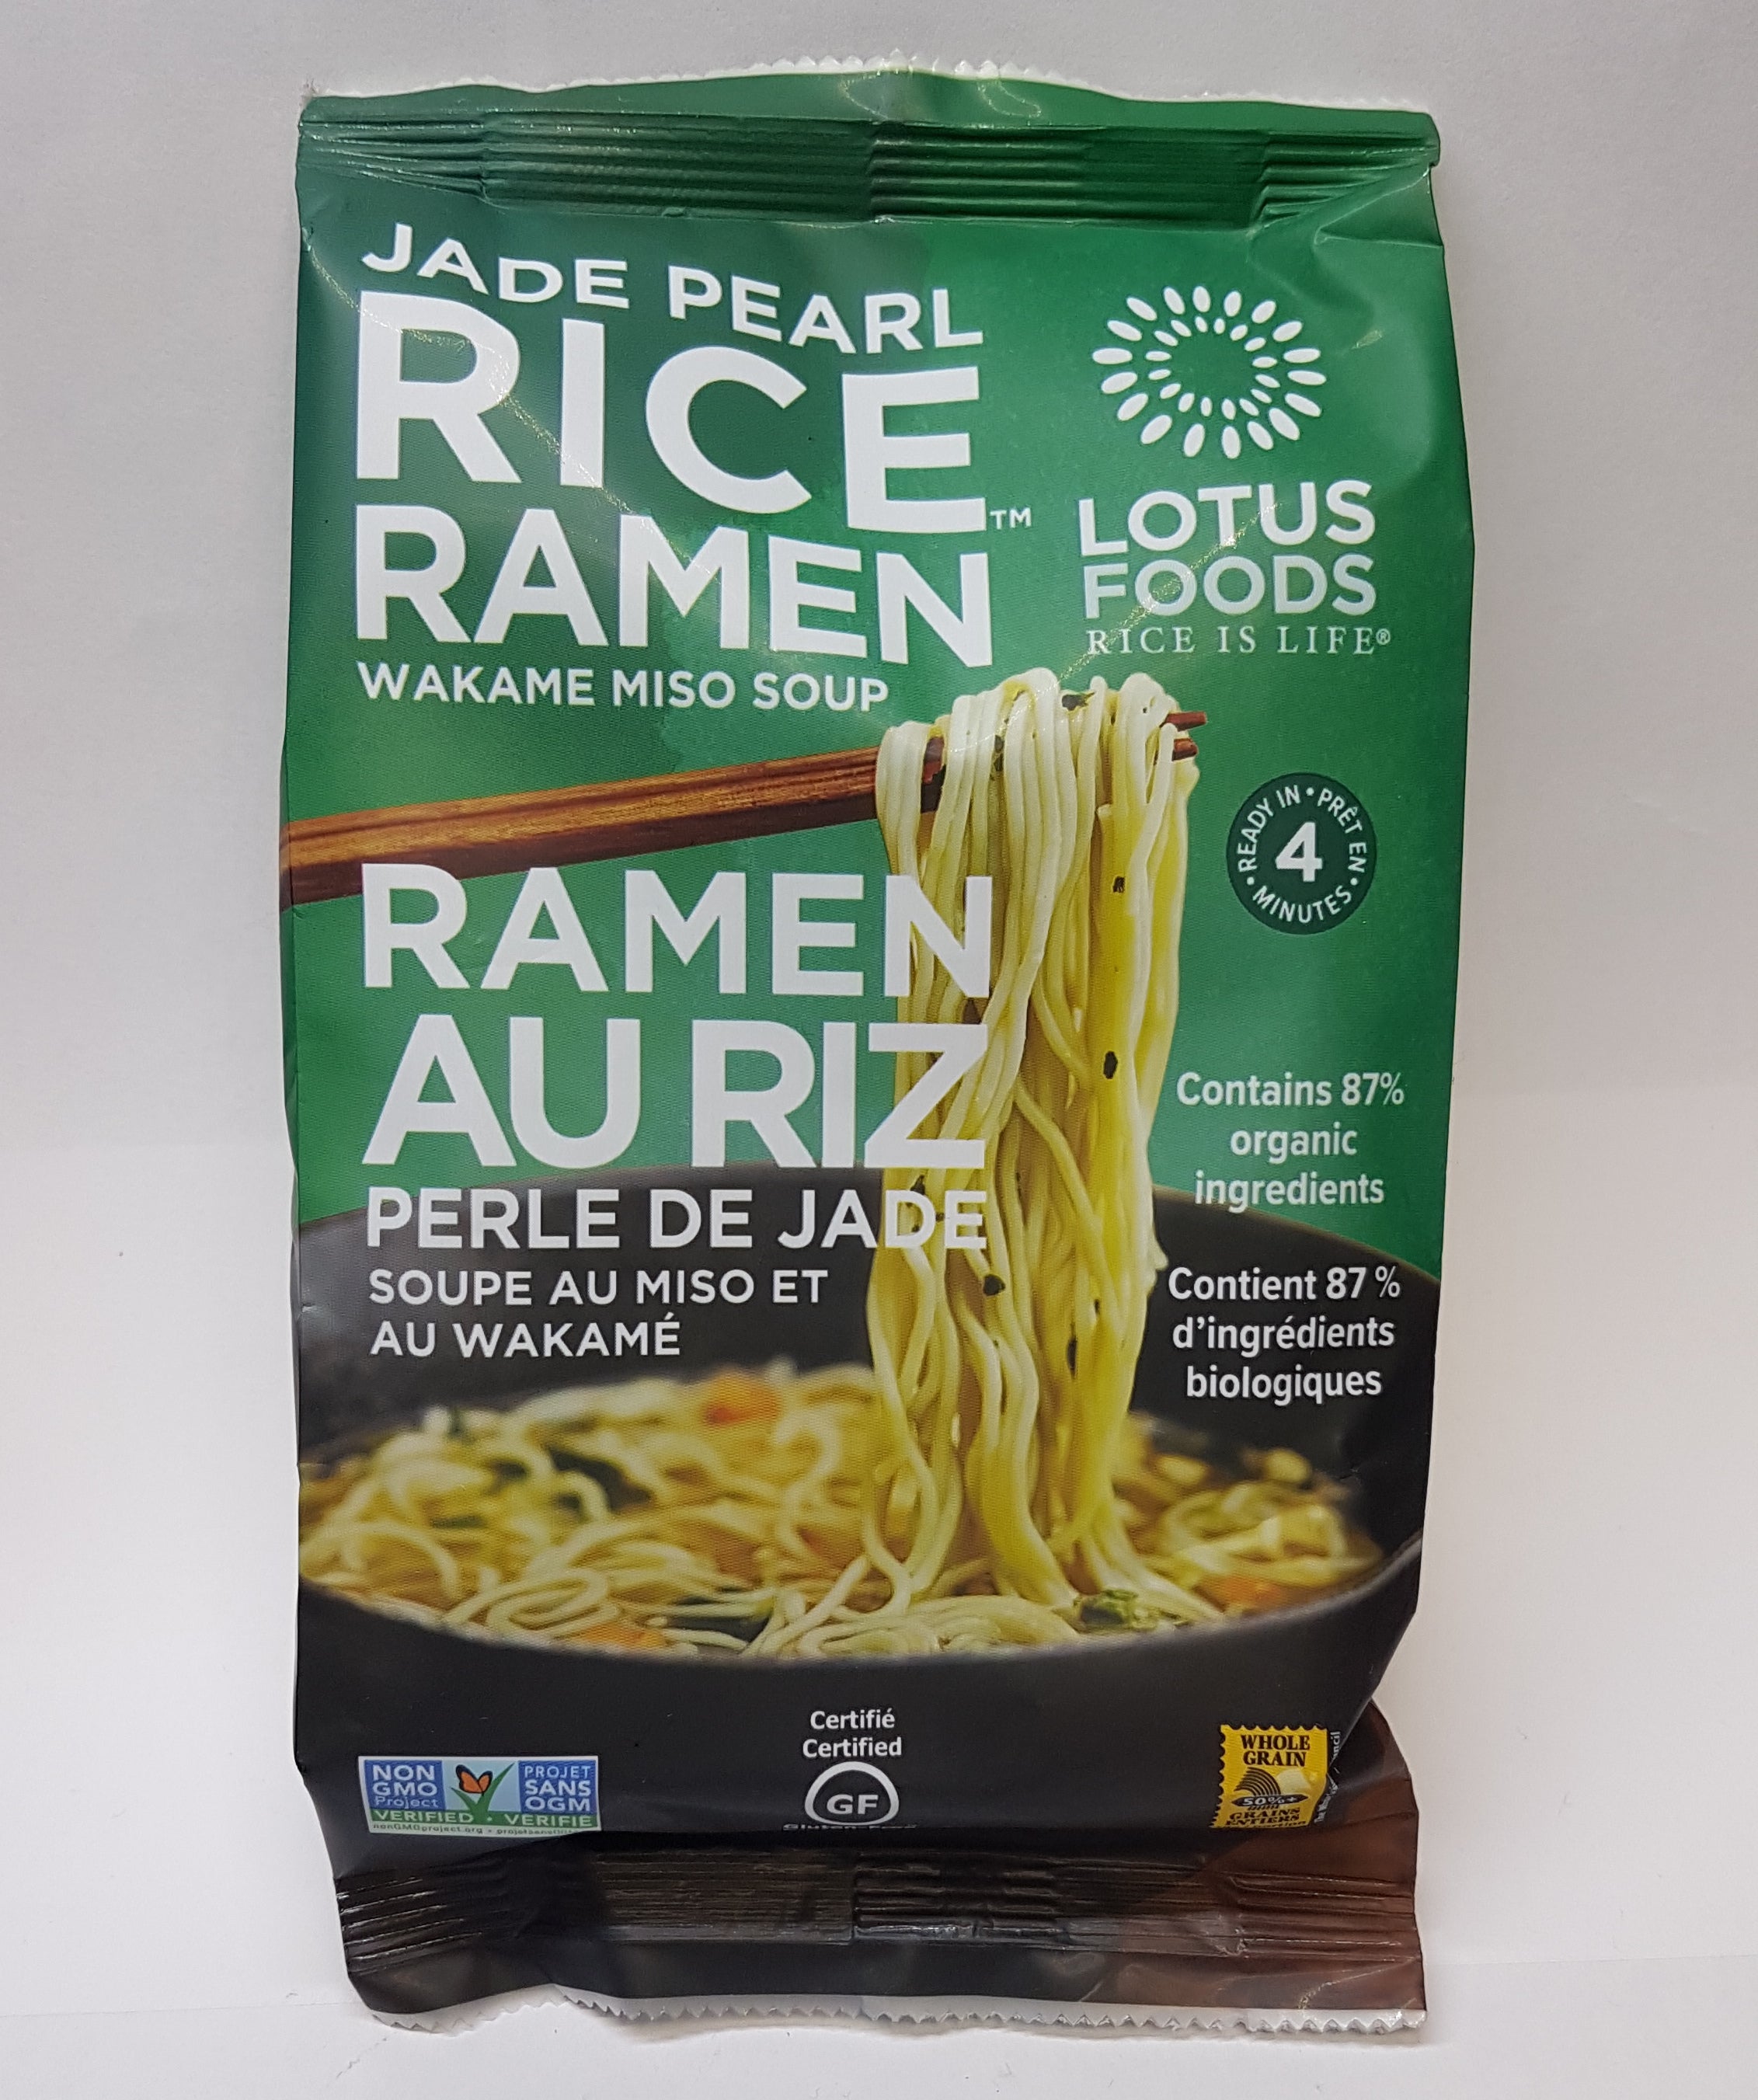 Lotus Foods Jade Pearl Rice Ramen Wakame Miso Soup (80g) - Lifestyle Markets